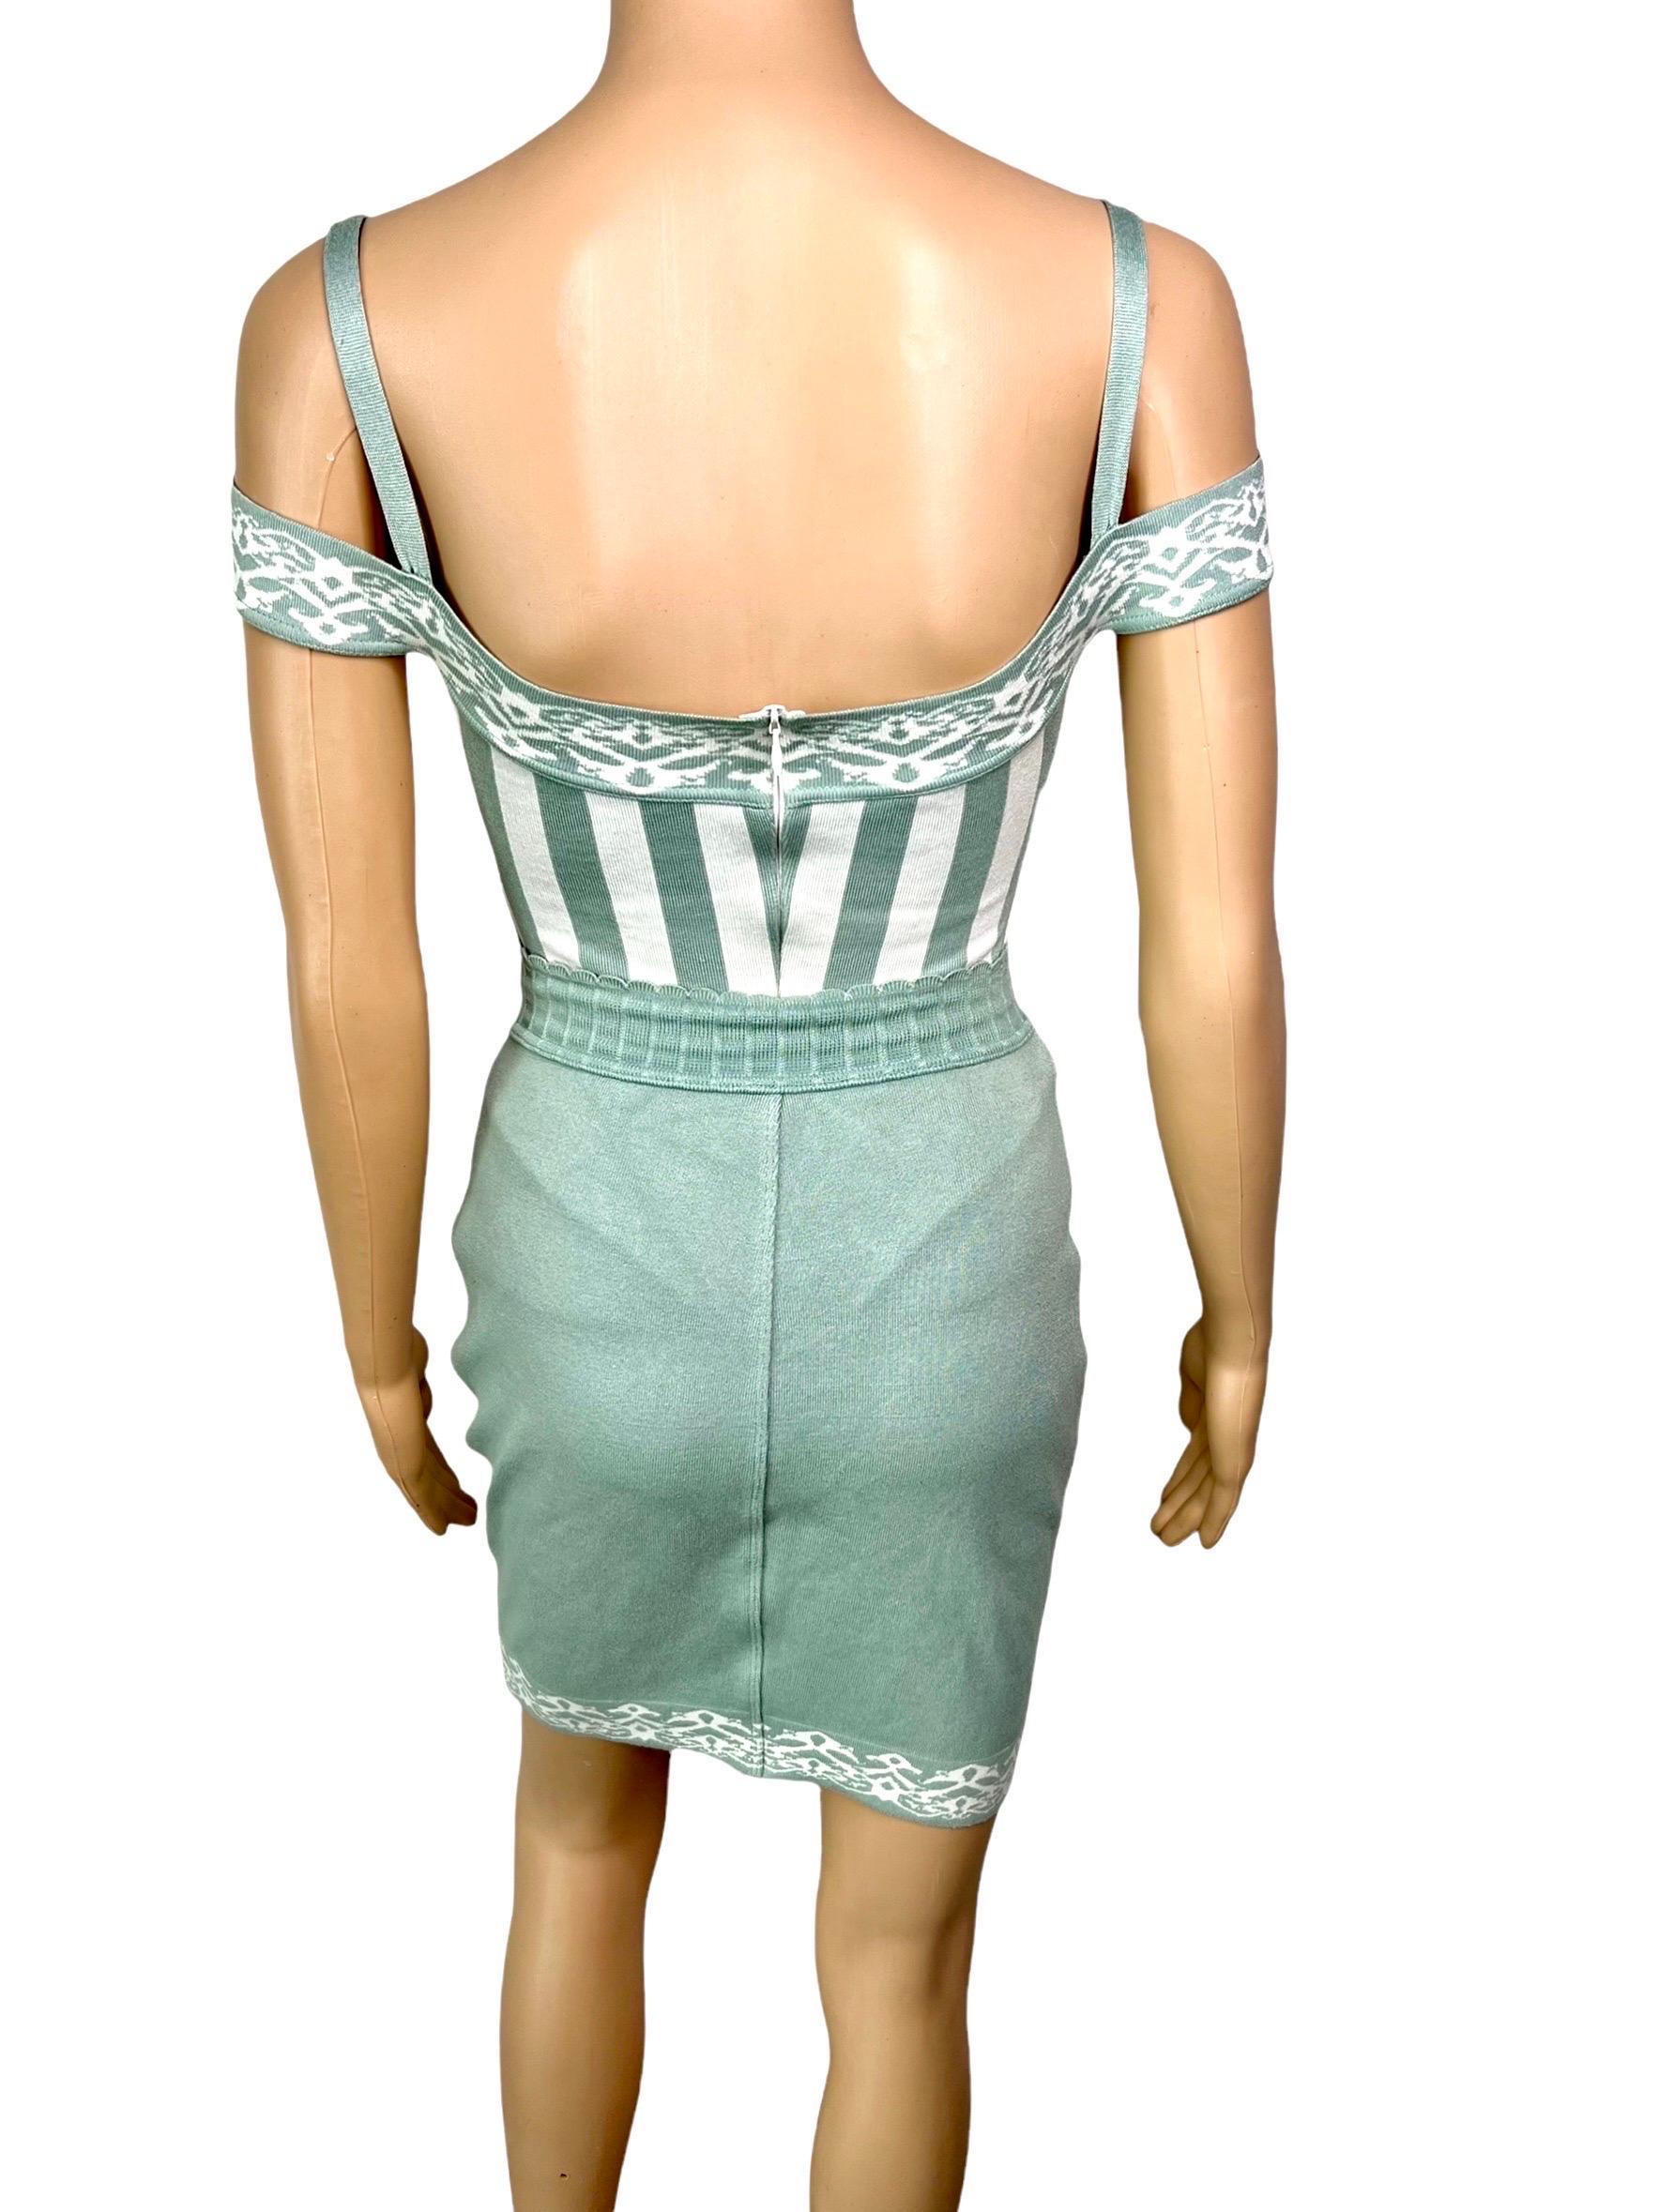 Azzedine Alaia S/S 1992 Vintage Striped Bodysuit Top and Mini Skirt 2 Piece Set For Sale 2